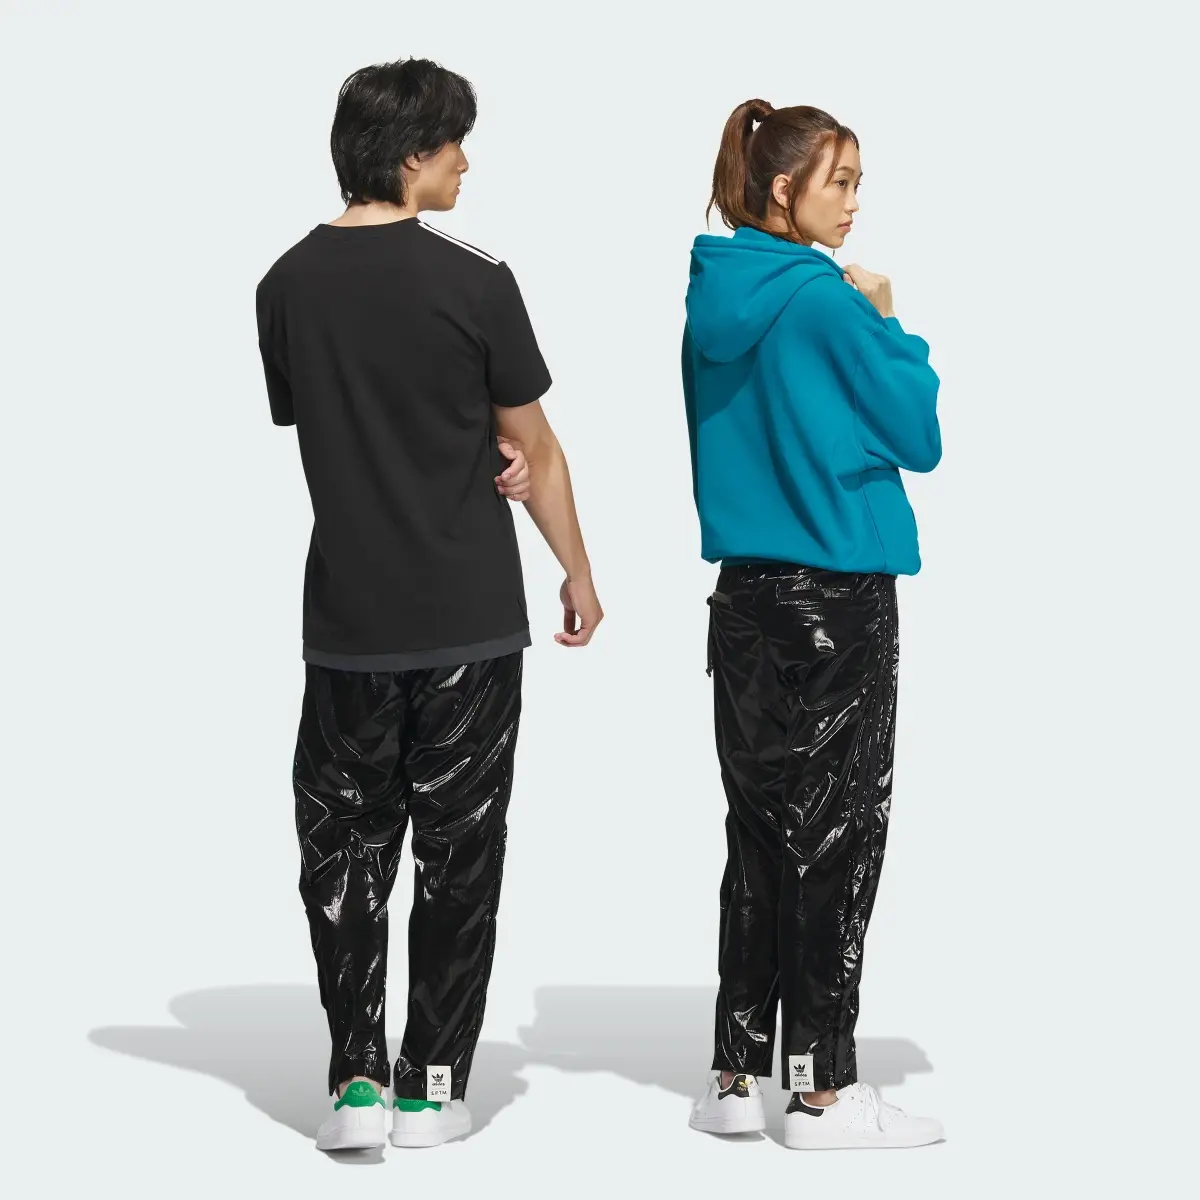 Adidas SFTM Shiny Pants (Gender Neutral). 2